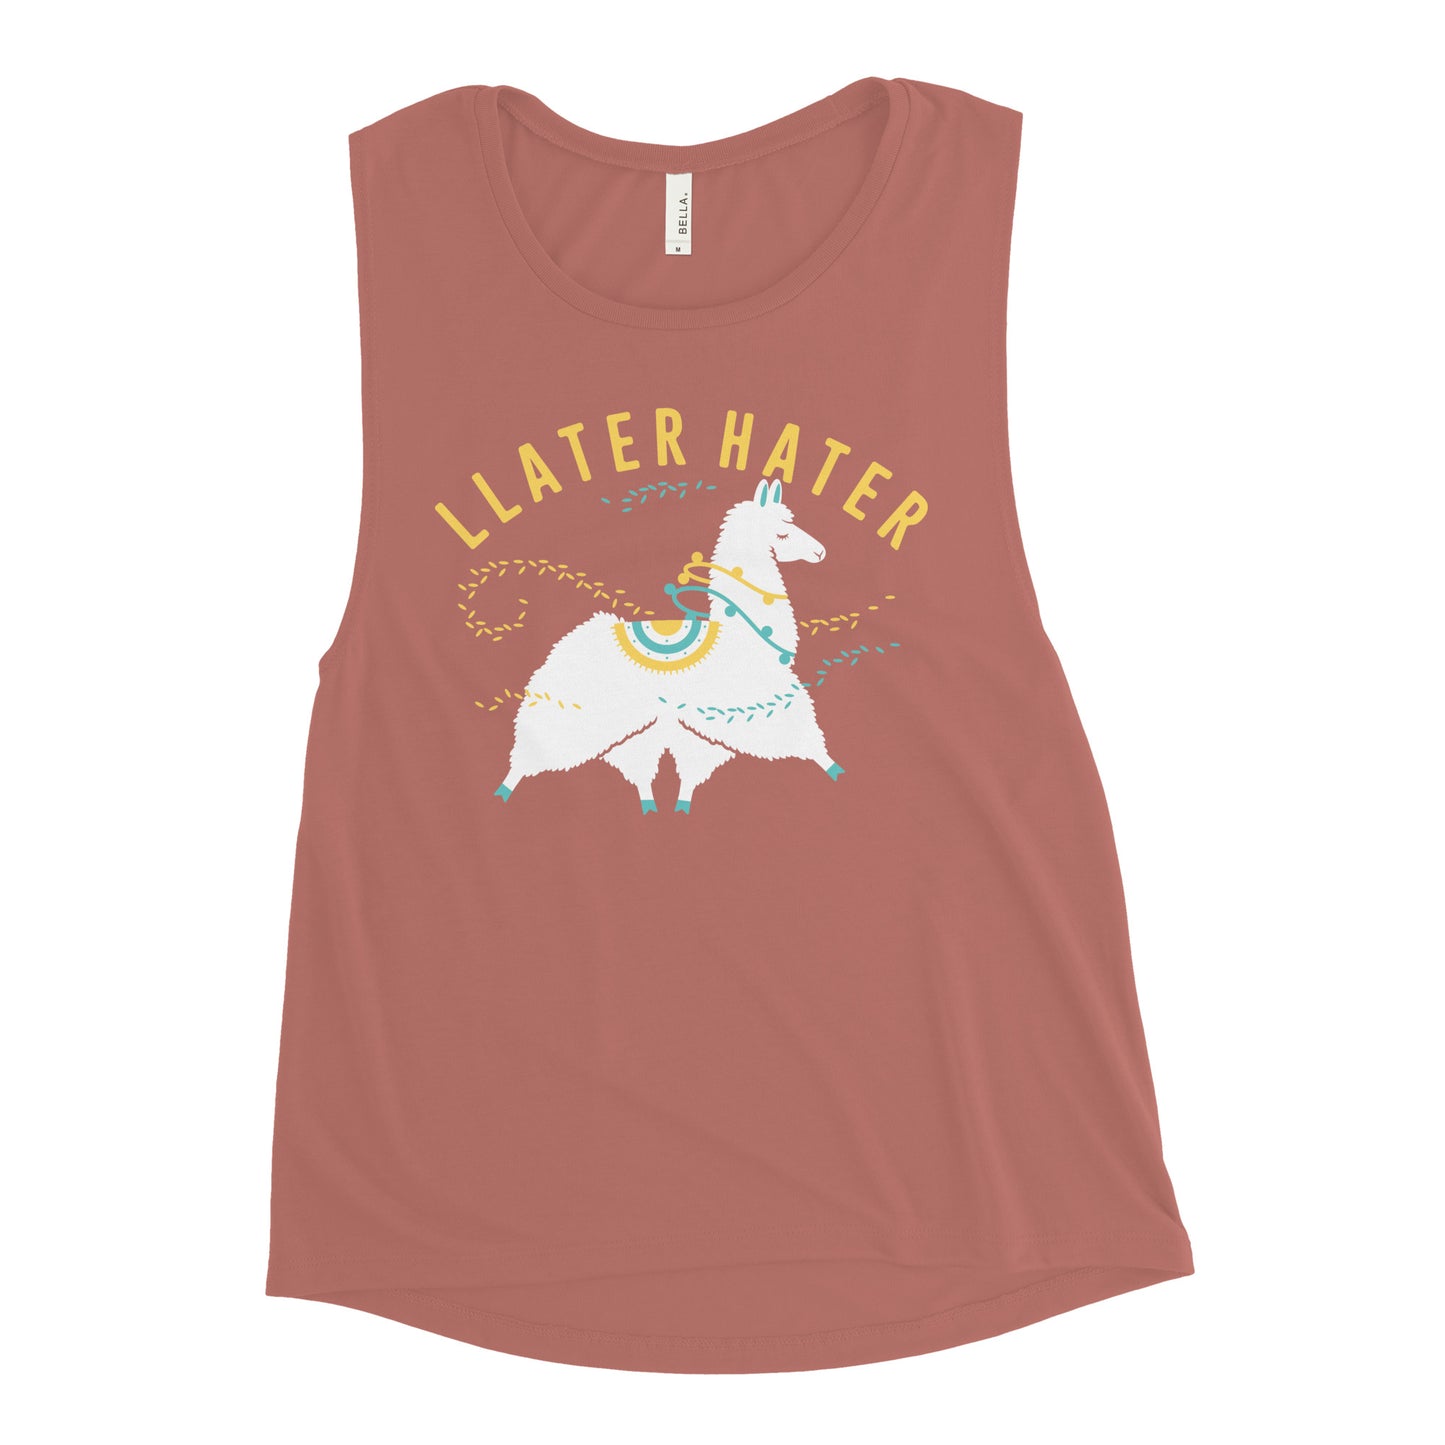 Llater Hater Women's Muscle Tank